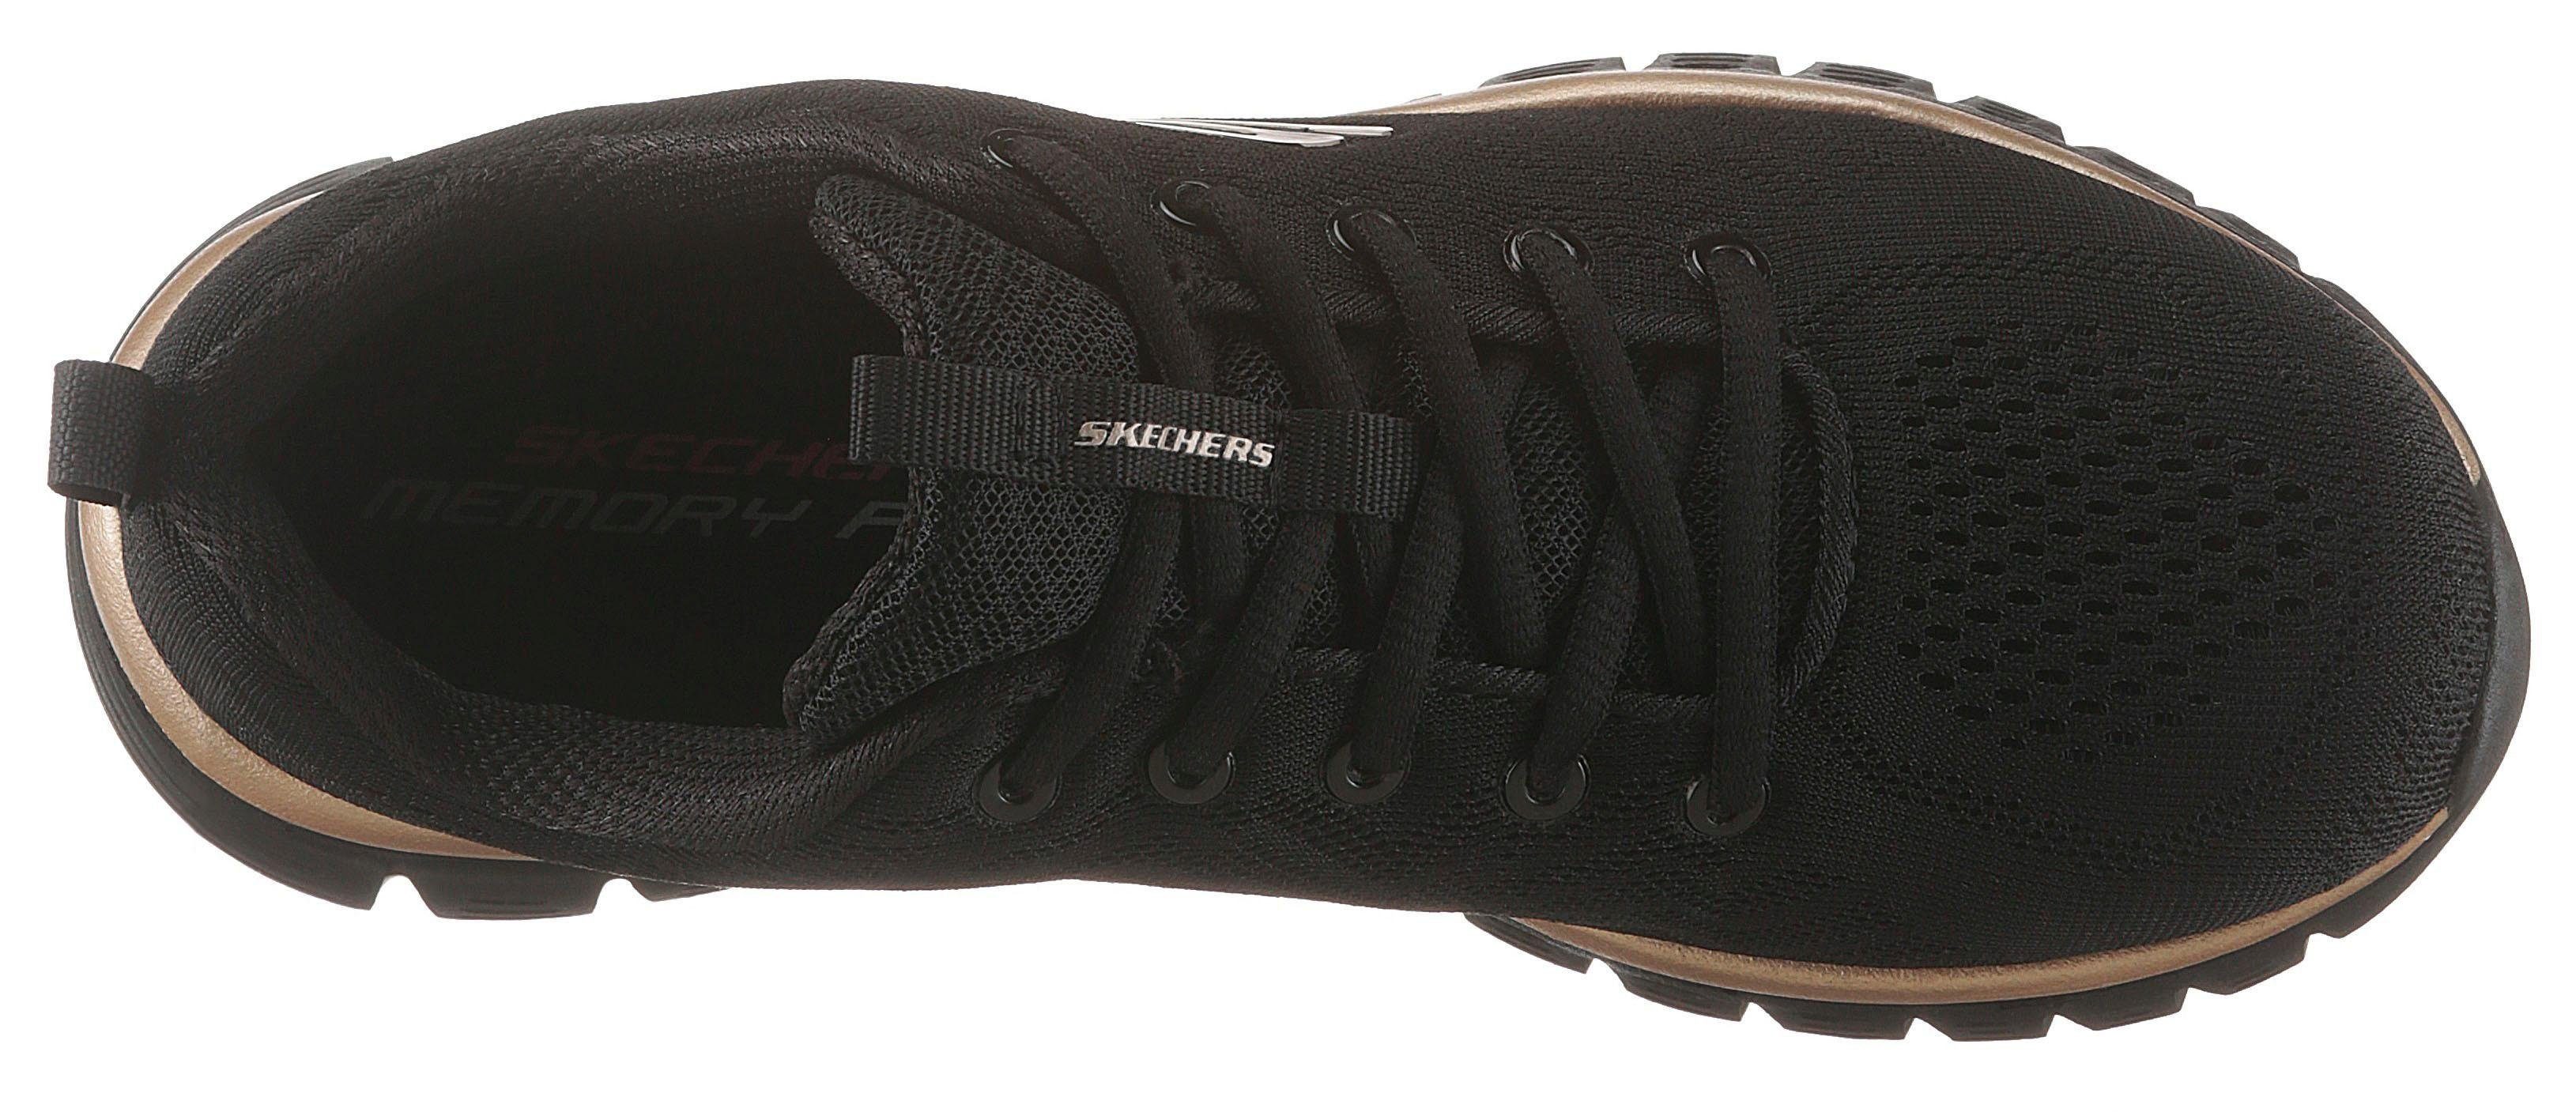 mit schwarz-goldfarben Foam Graceful Memory Connected Get Skechers Sneaker durch - Dämpfung